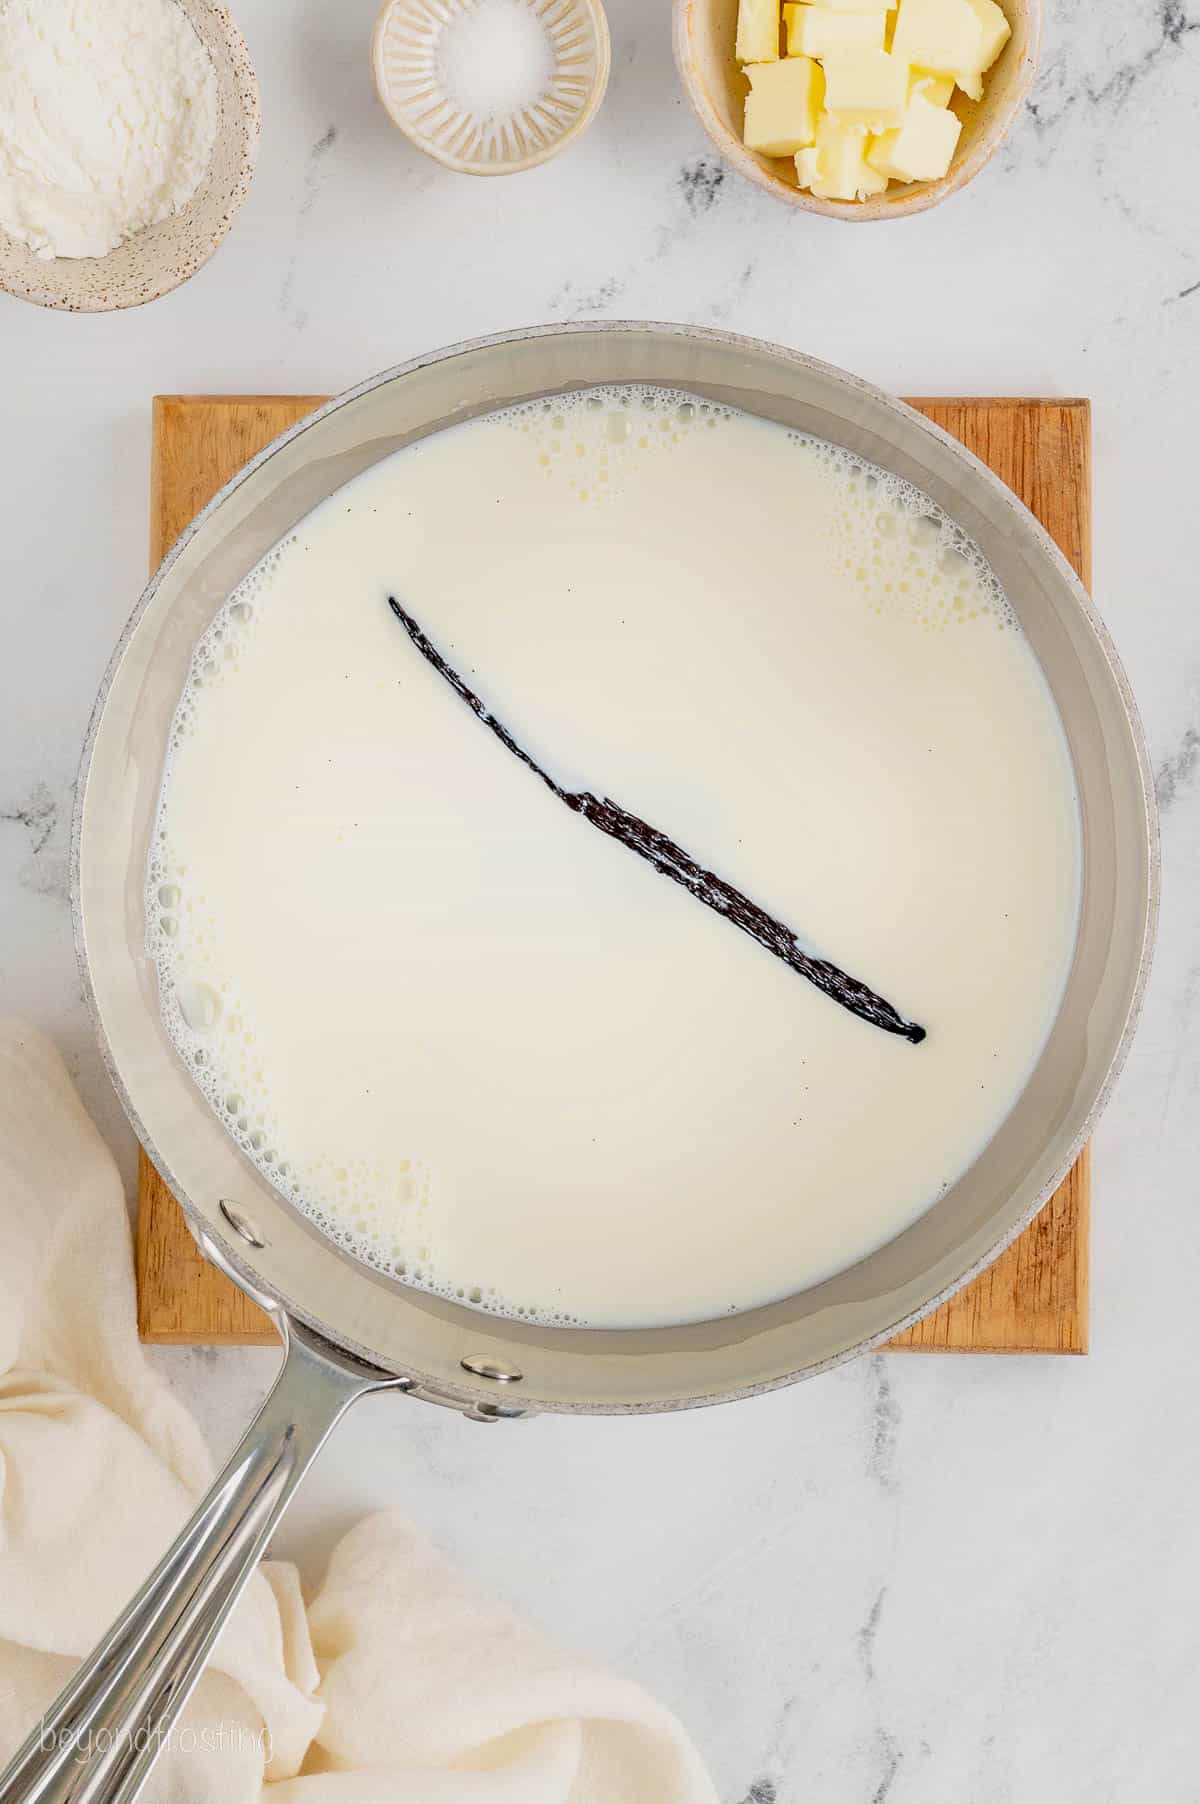 Milk and vanilla bean simmering in a saucepan.